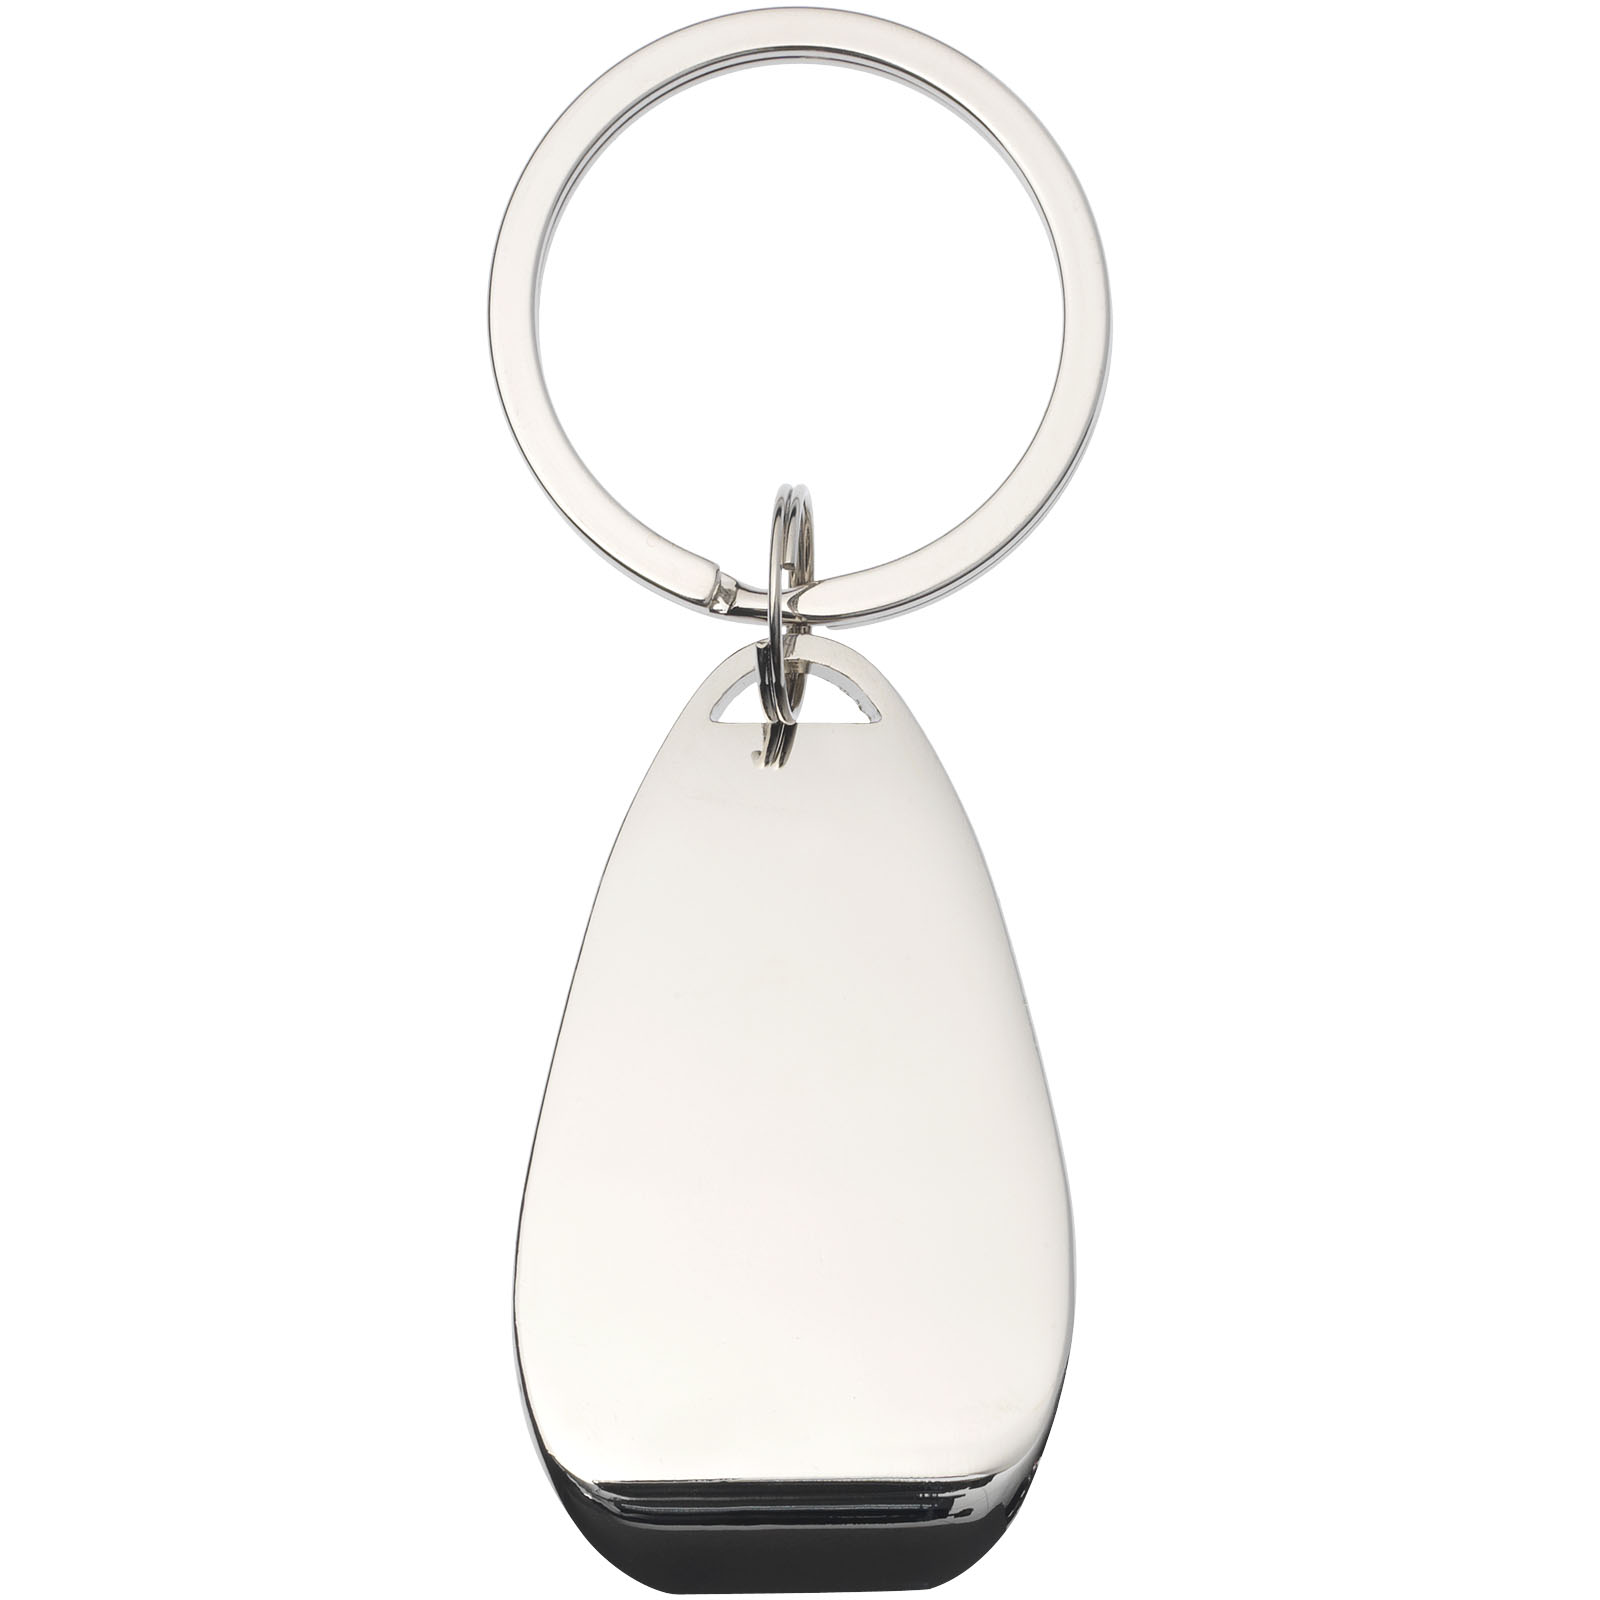 Advertising Bottle Openers & Accessories - Don bottle opener keychain - 2